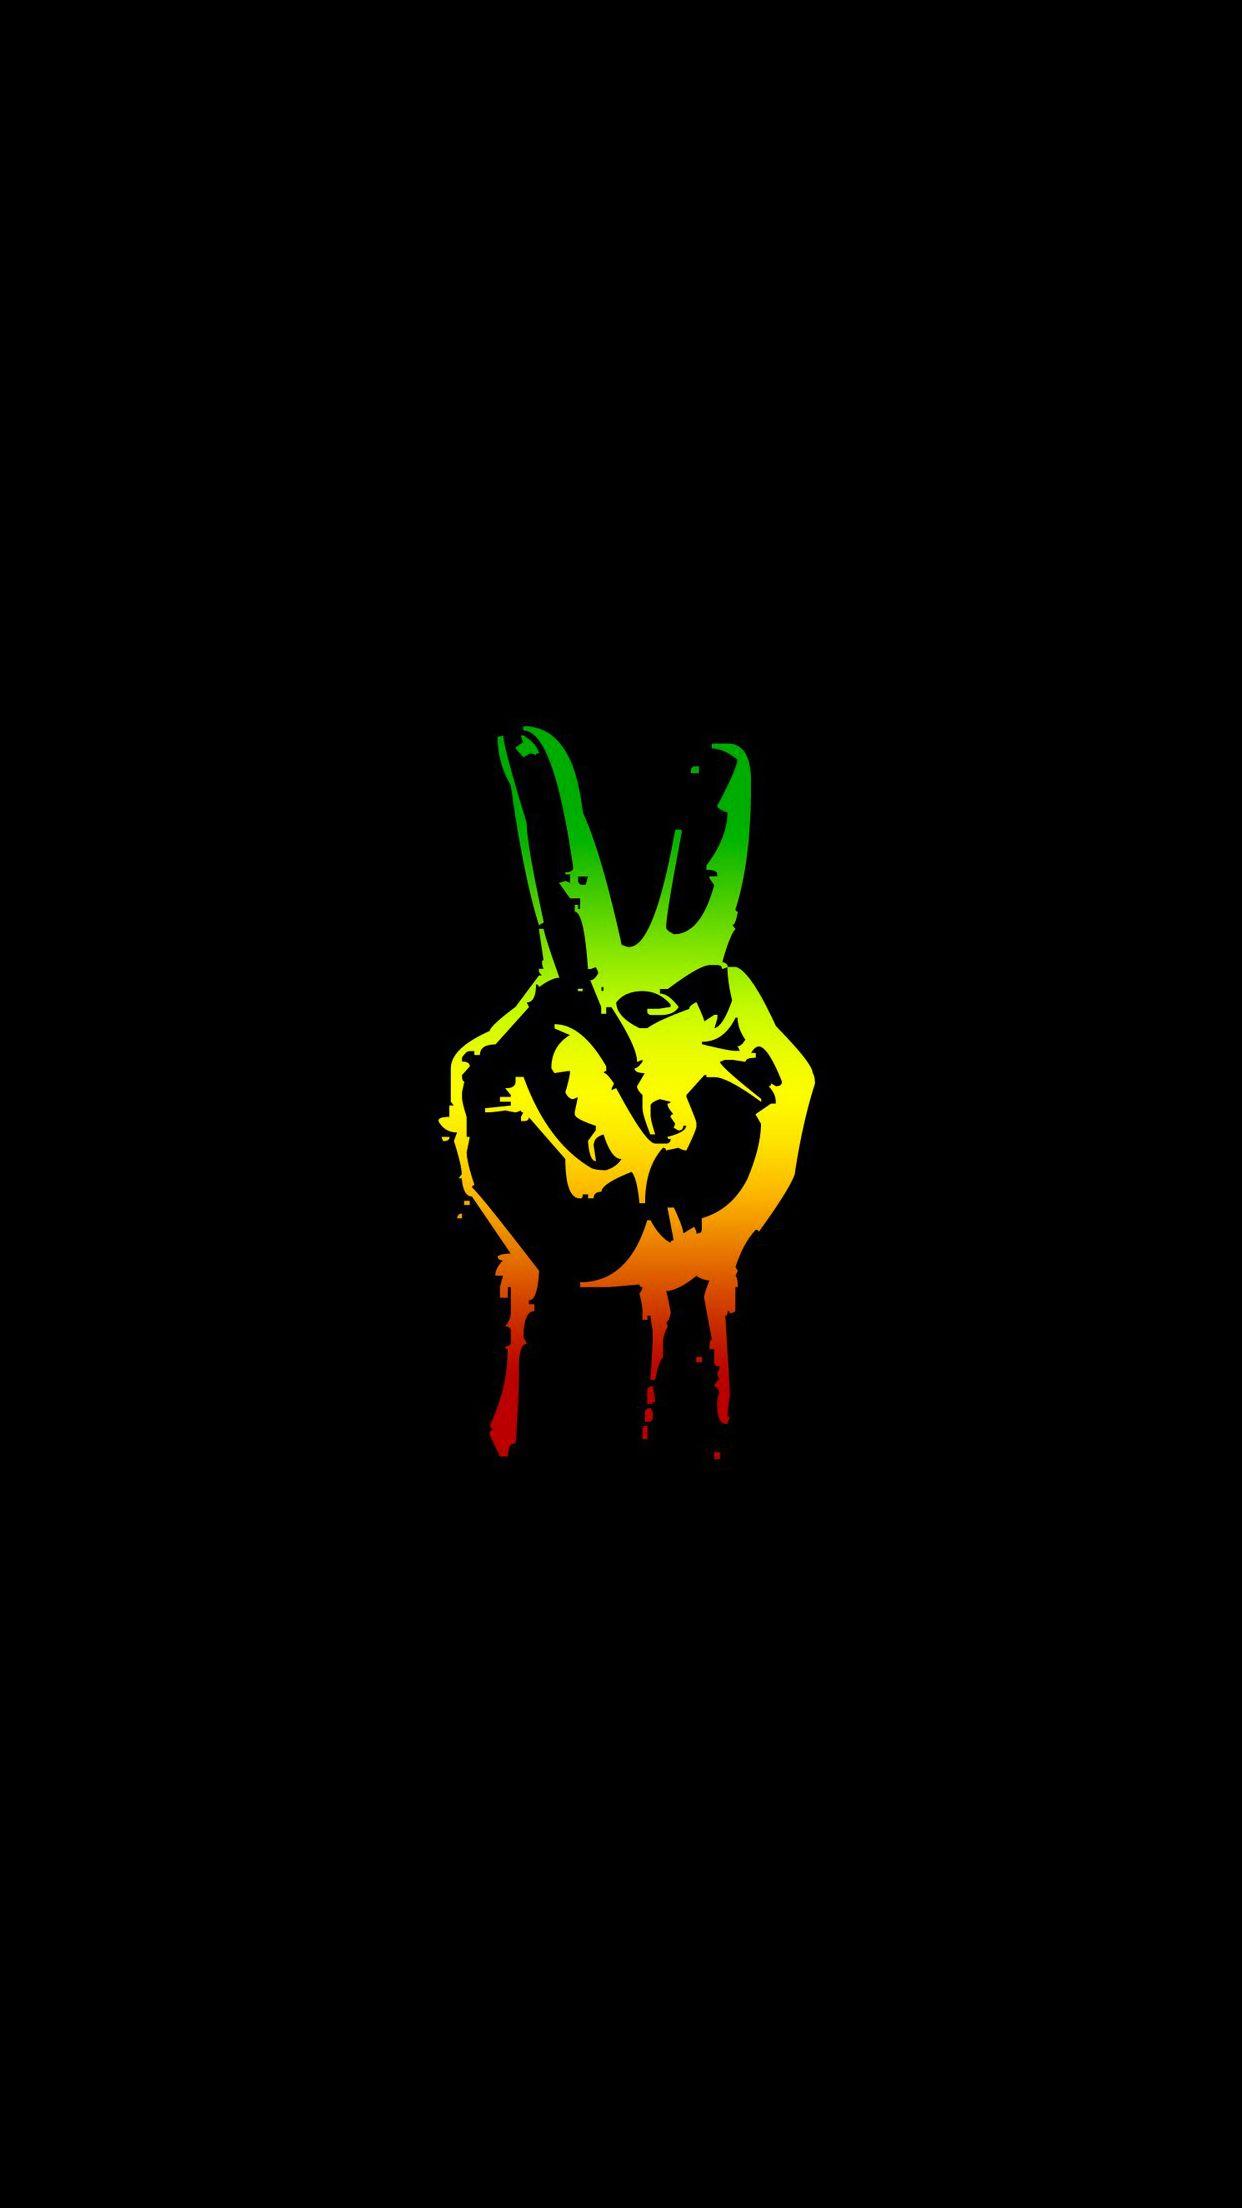 Reggae peace Wallpaper for iPhone X, 6